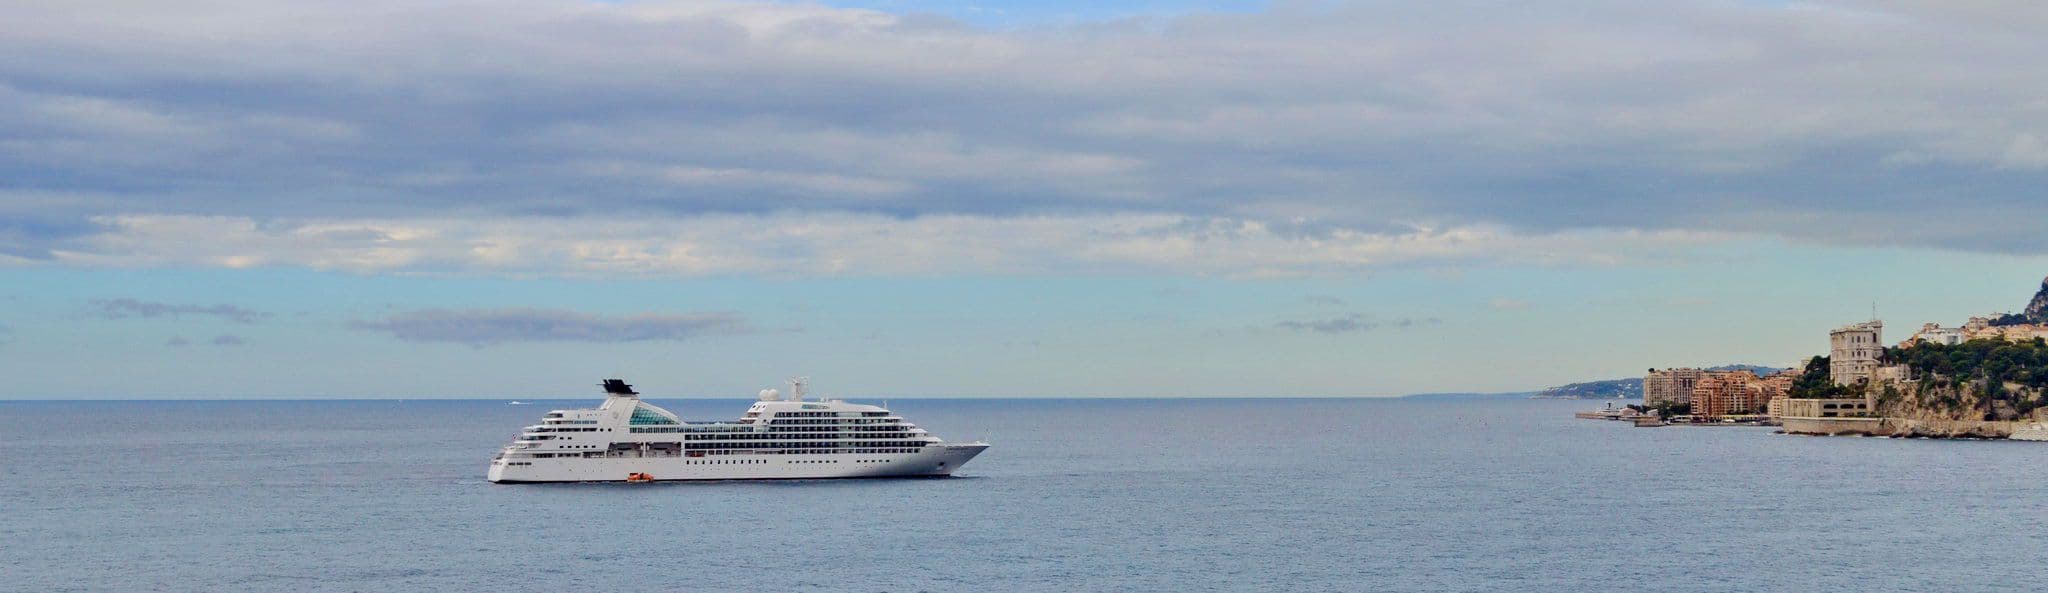 Seabourn Cruise Line